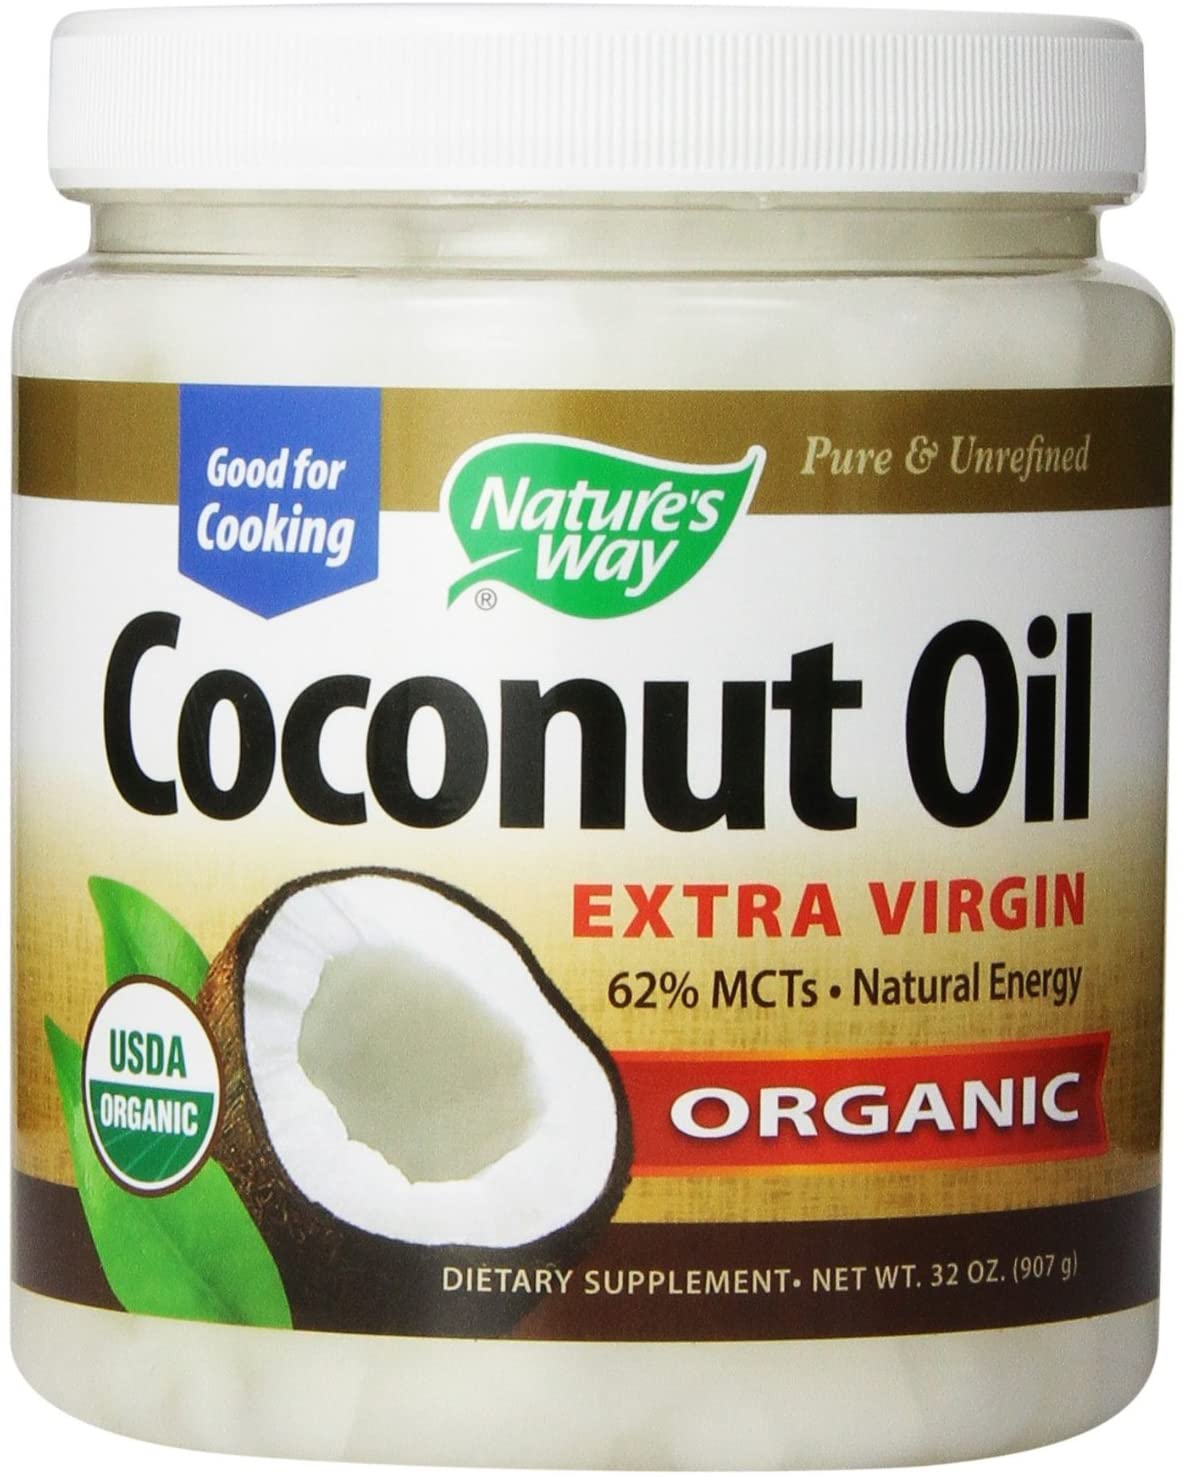 Nature's Way Coconut oil Extra Virgin (4760540217391)